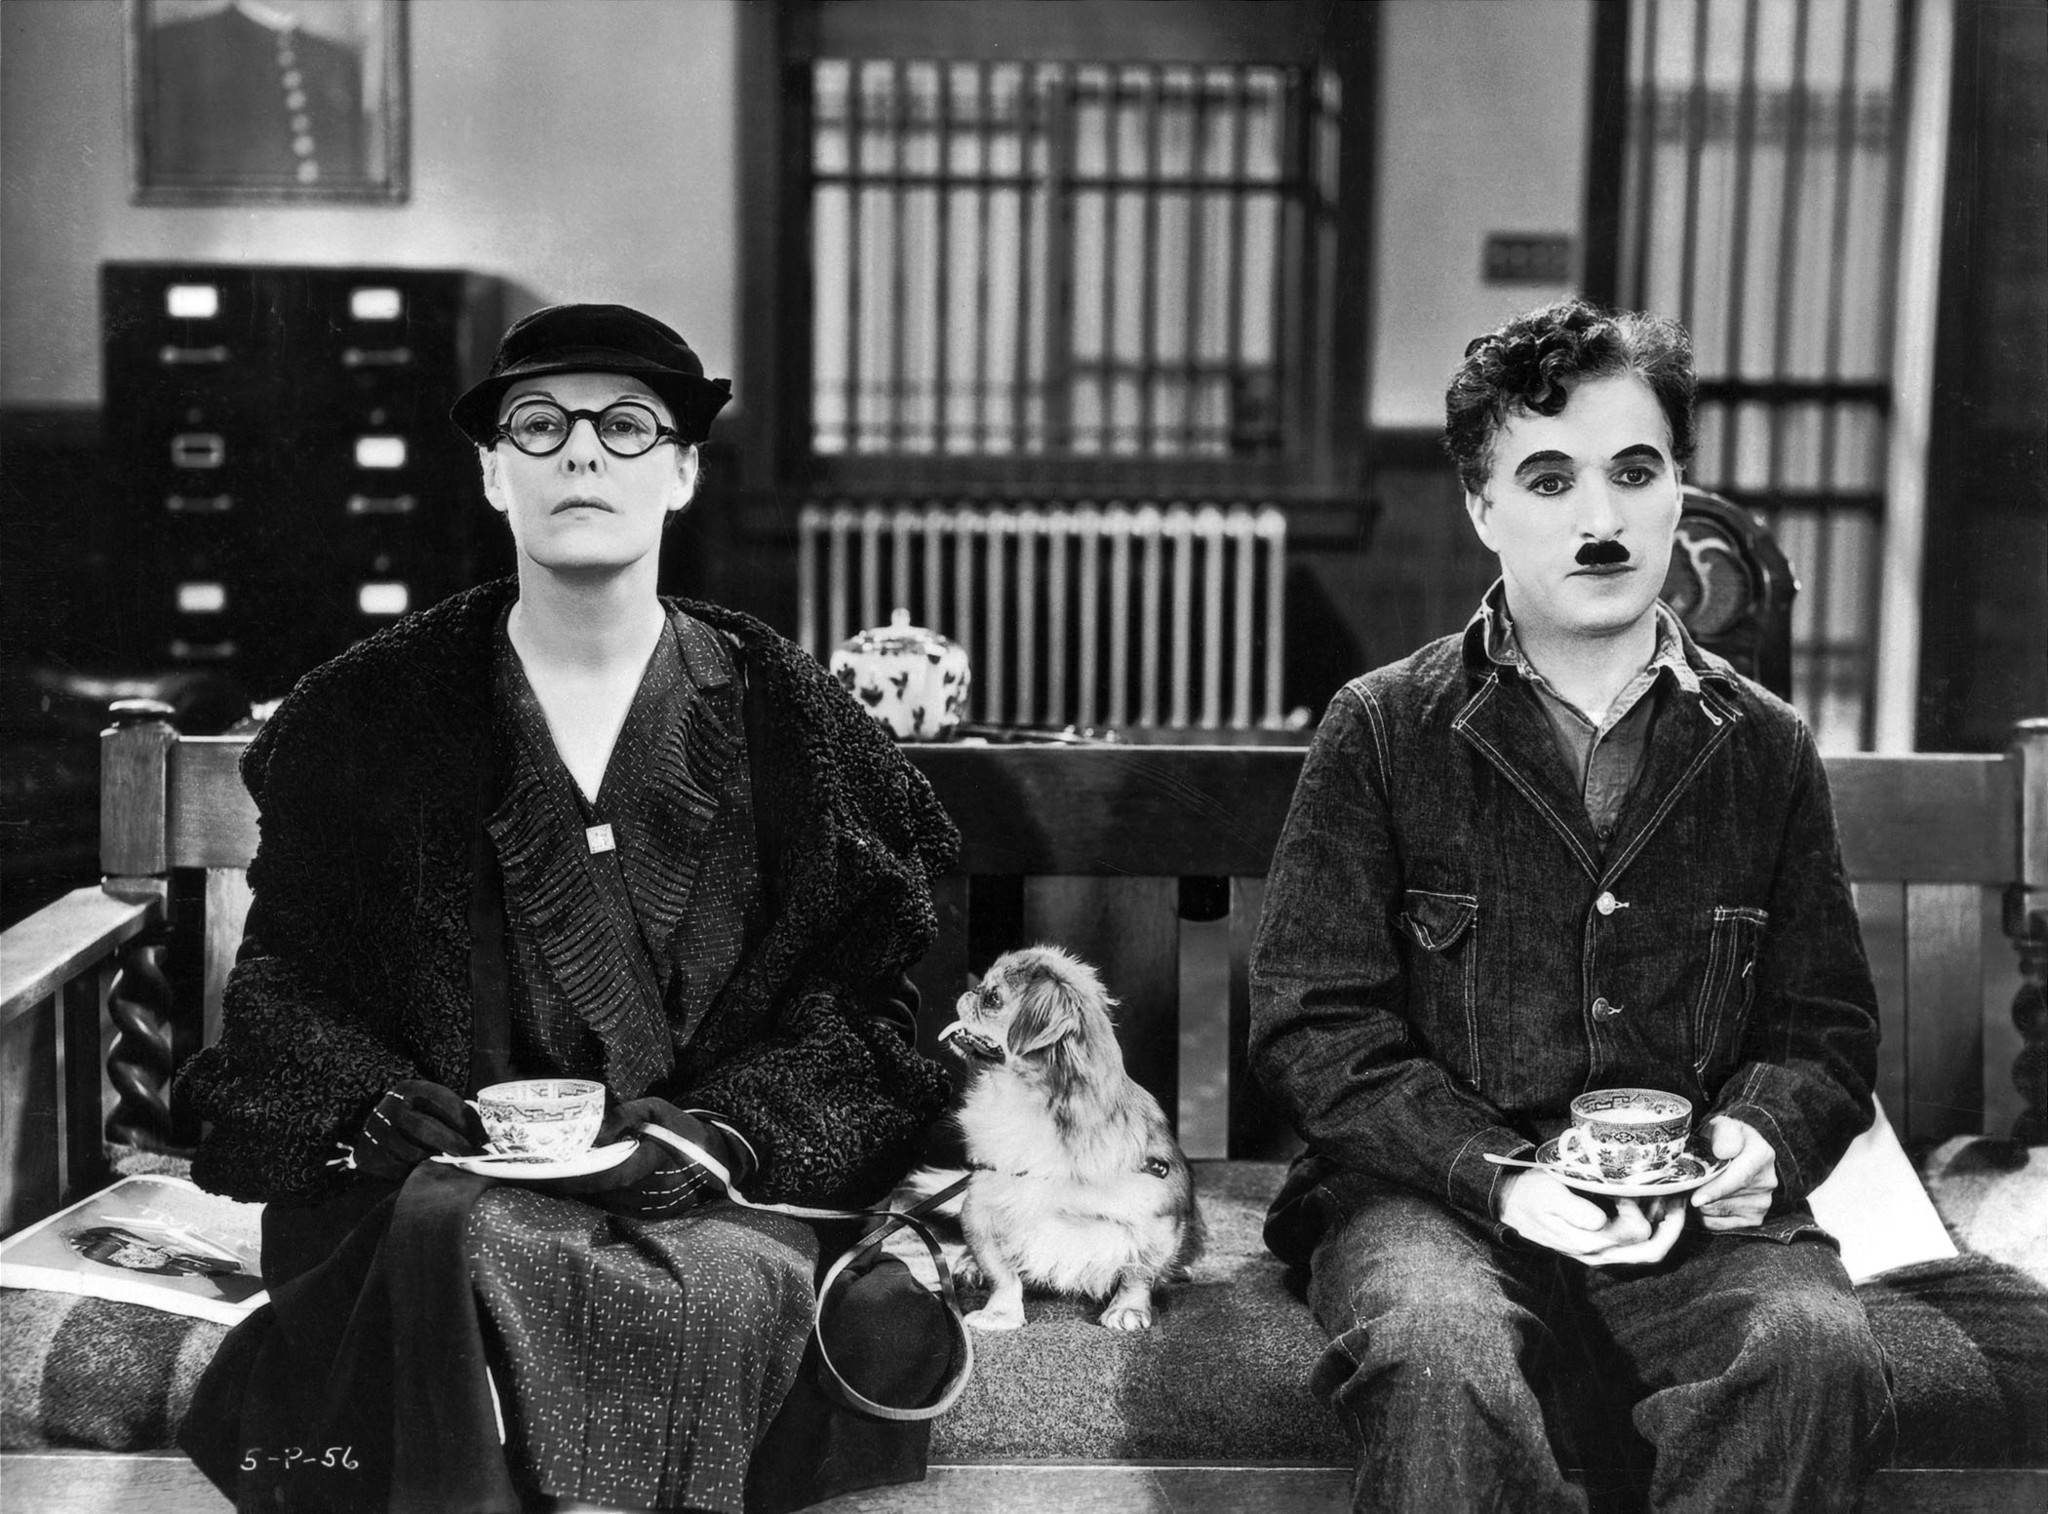 Still of Charles Chaplin in Modern Times (1936)